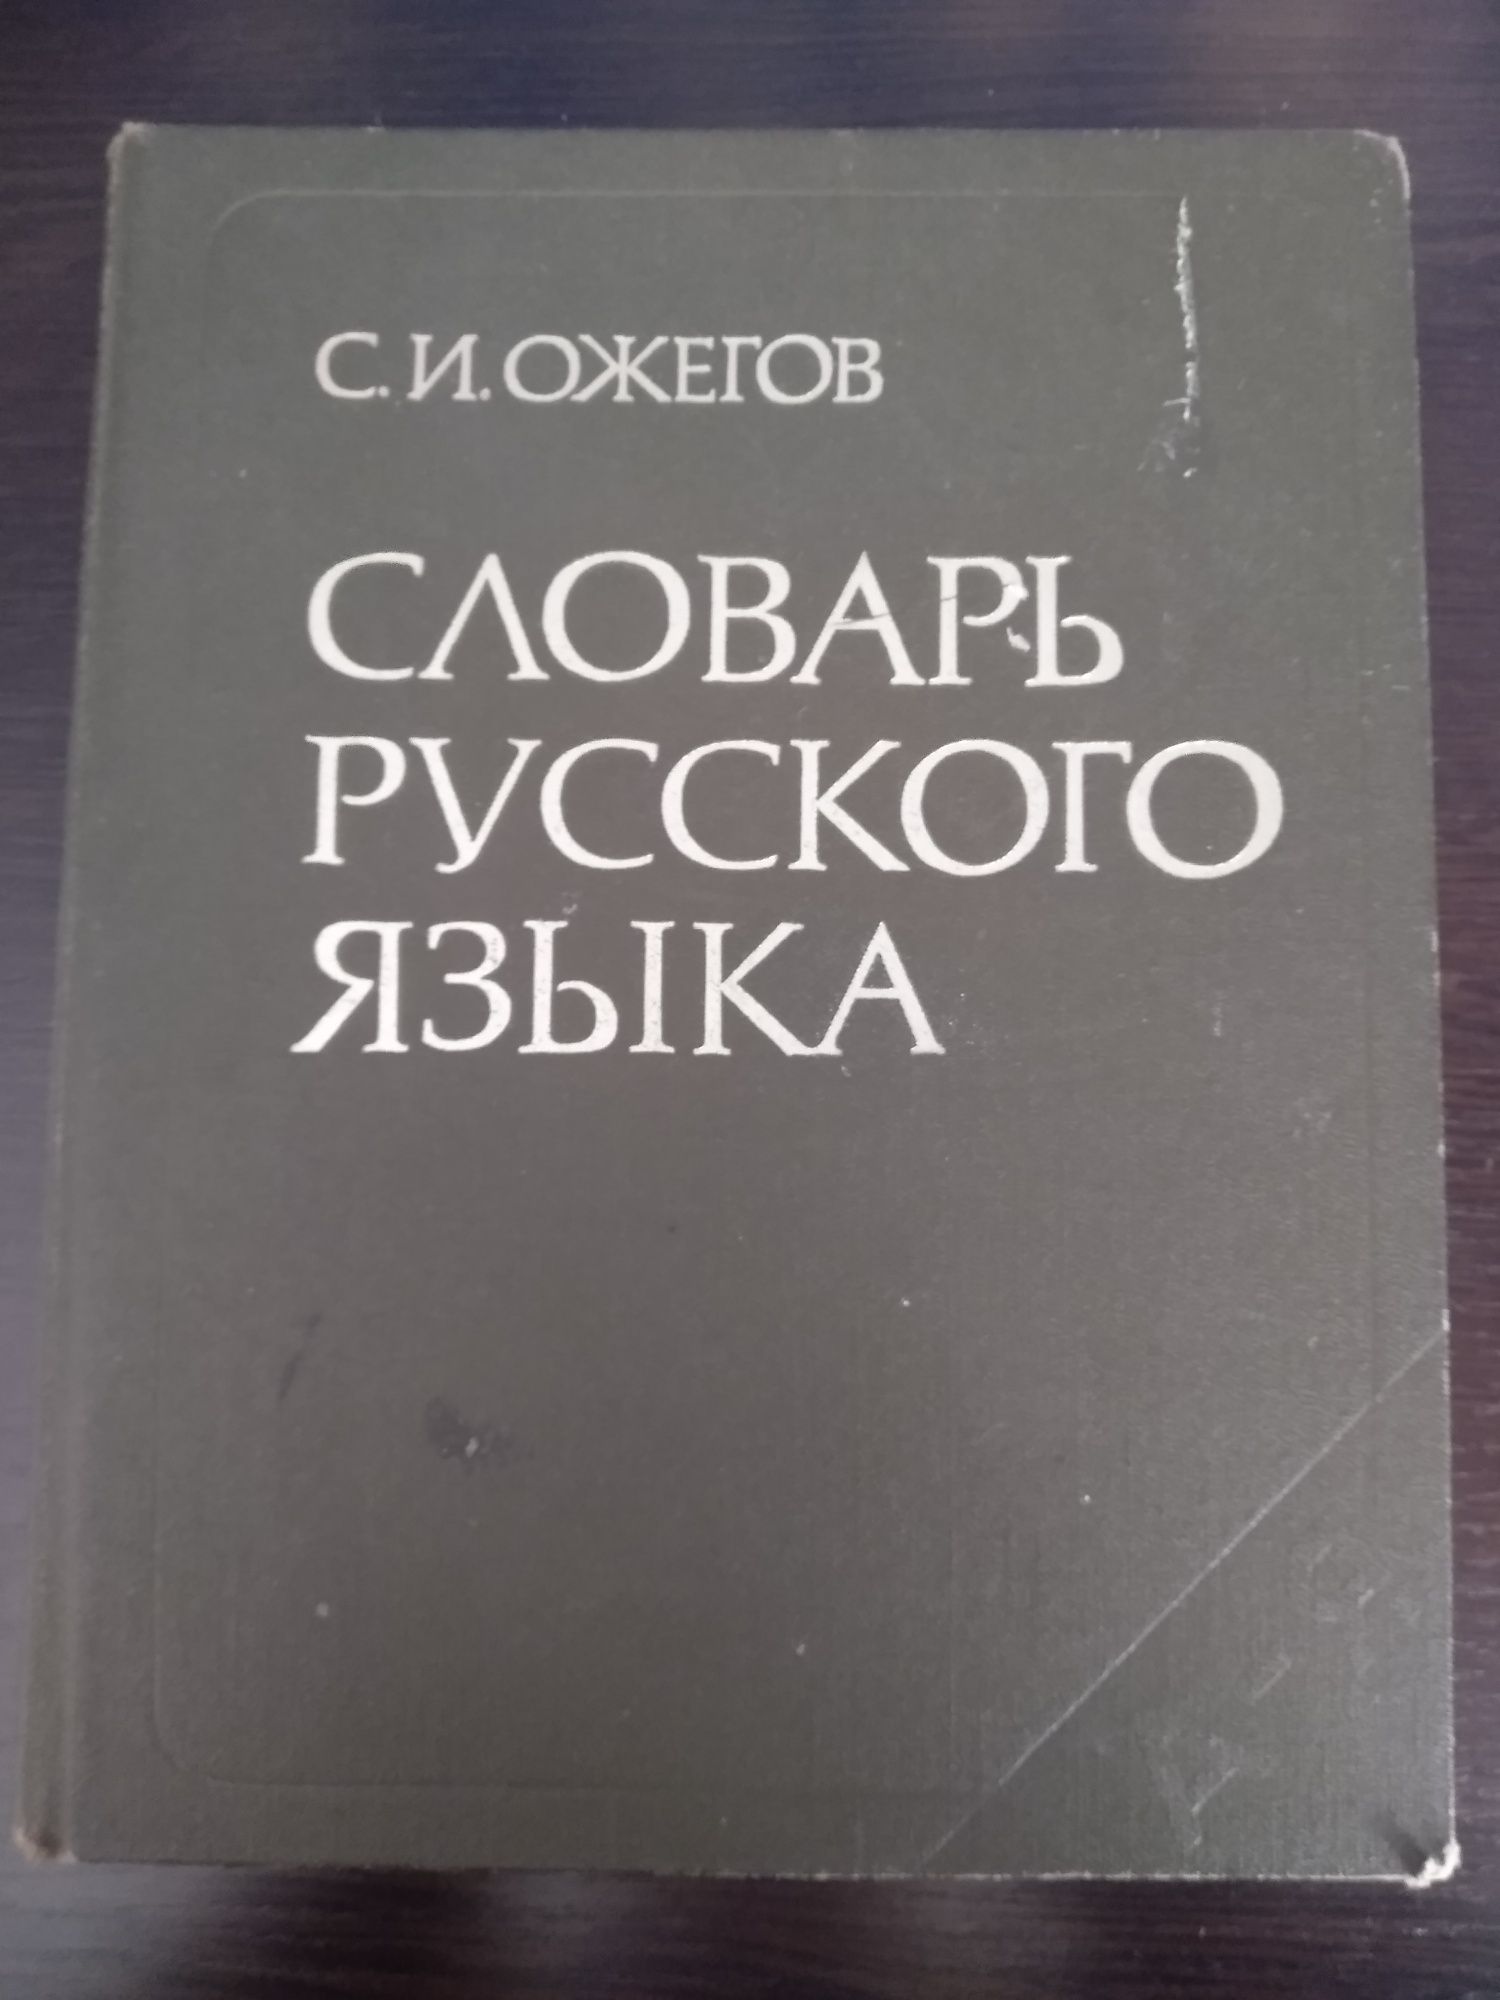 Продаю советские книги.